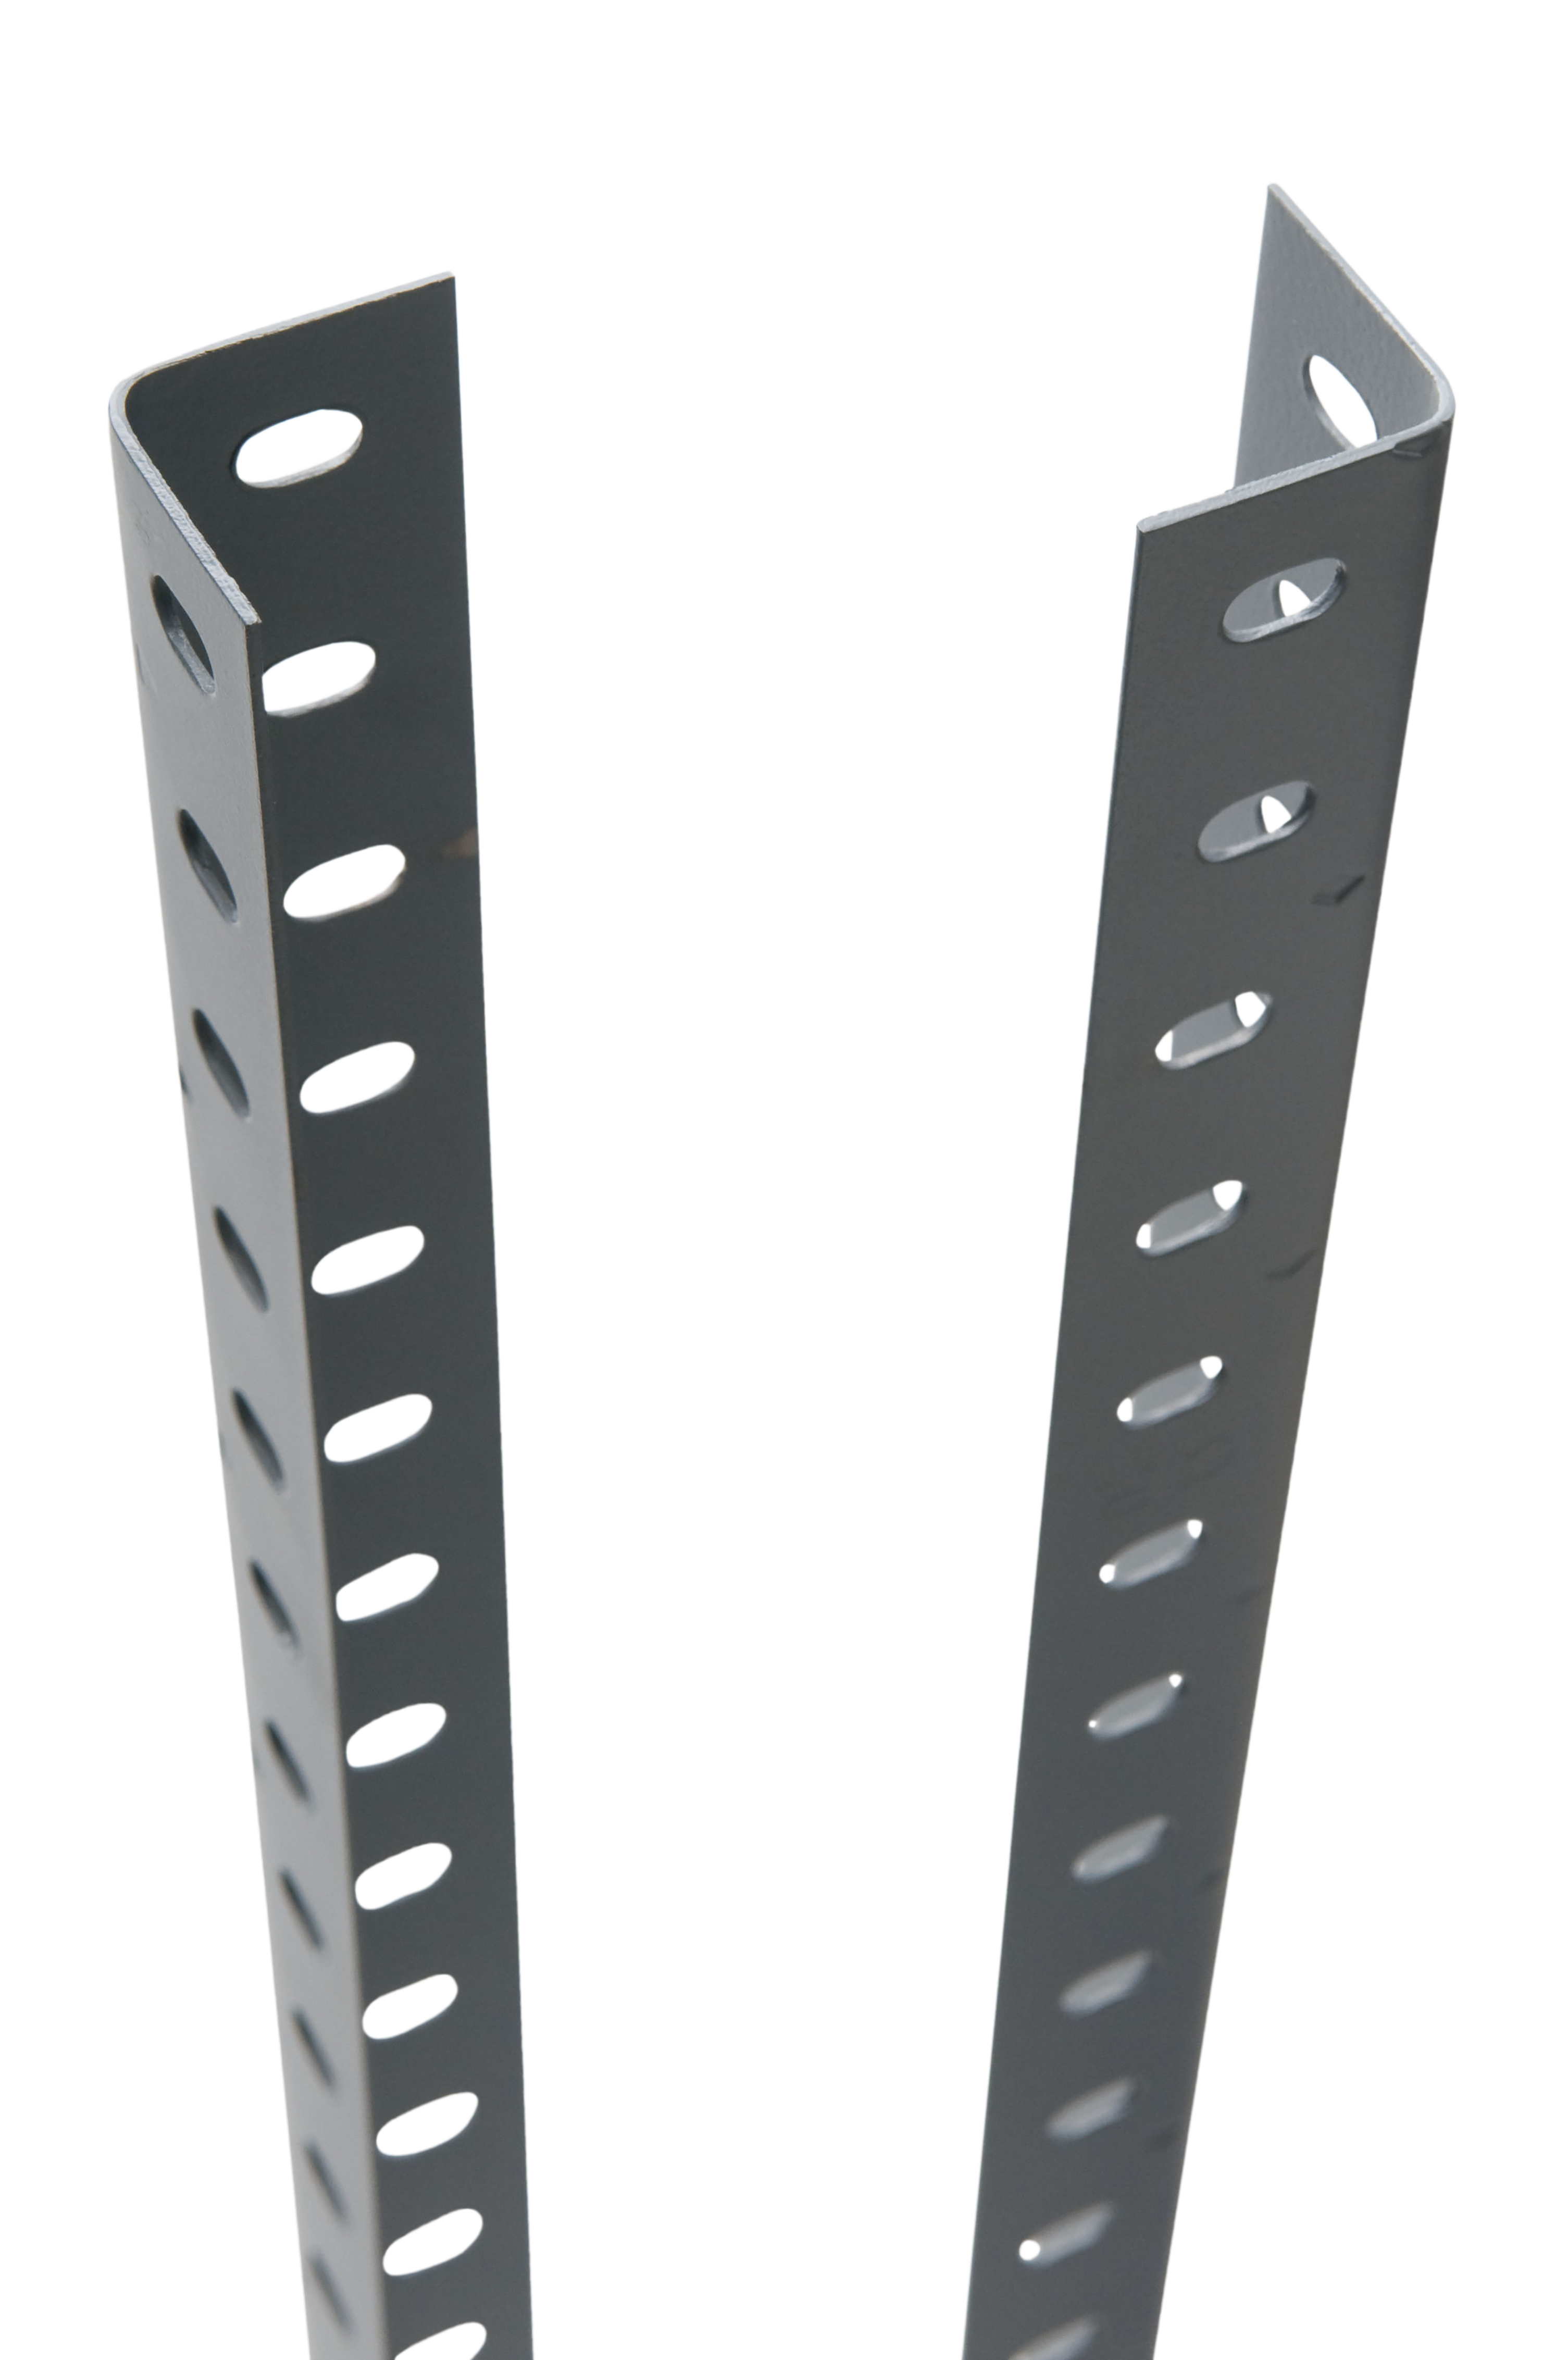 Perfil para estantería metálica de acero de 200 x 3,5 cm (largo x ancho)